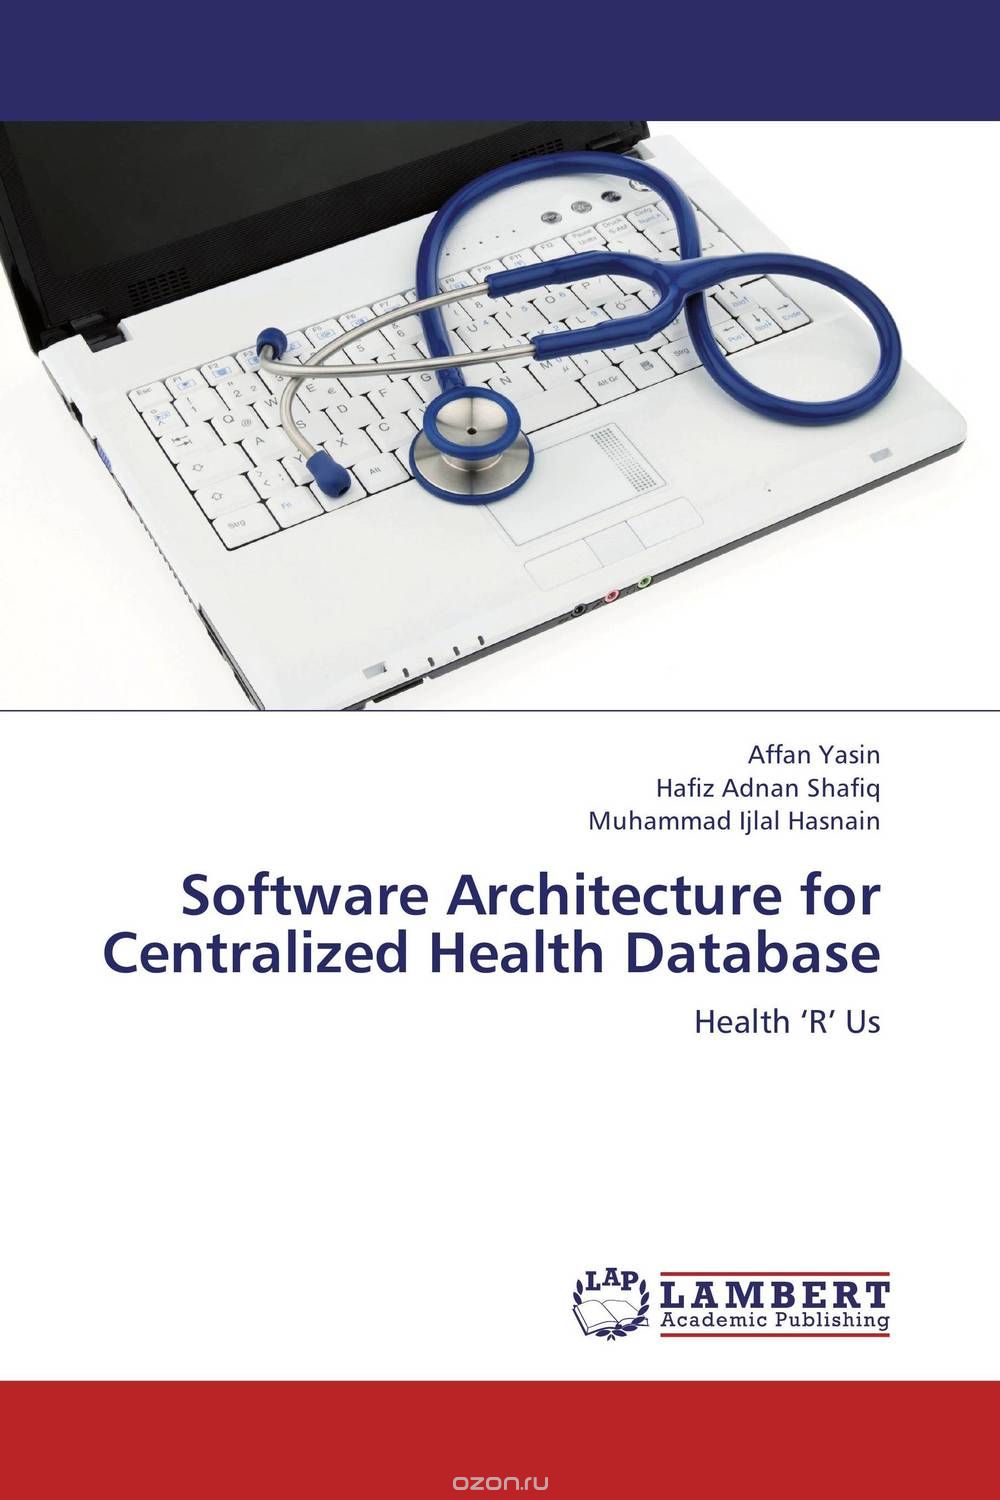 Скачать книгу "Software Architecture for Centralized Health Database"